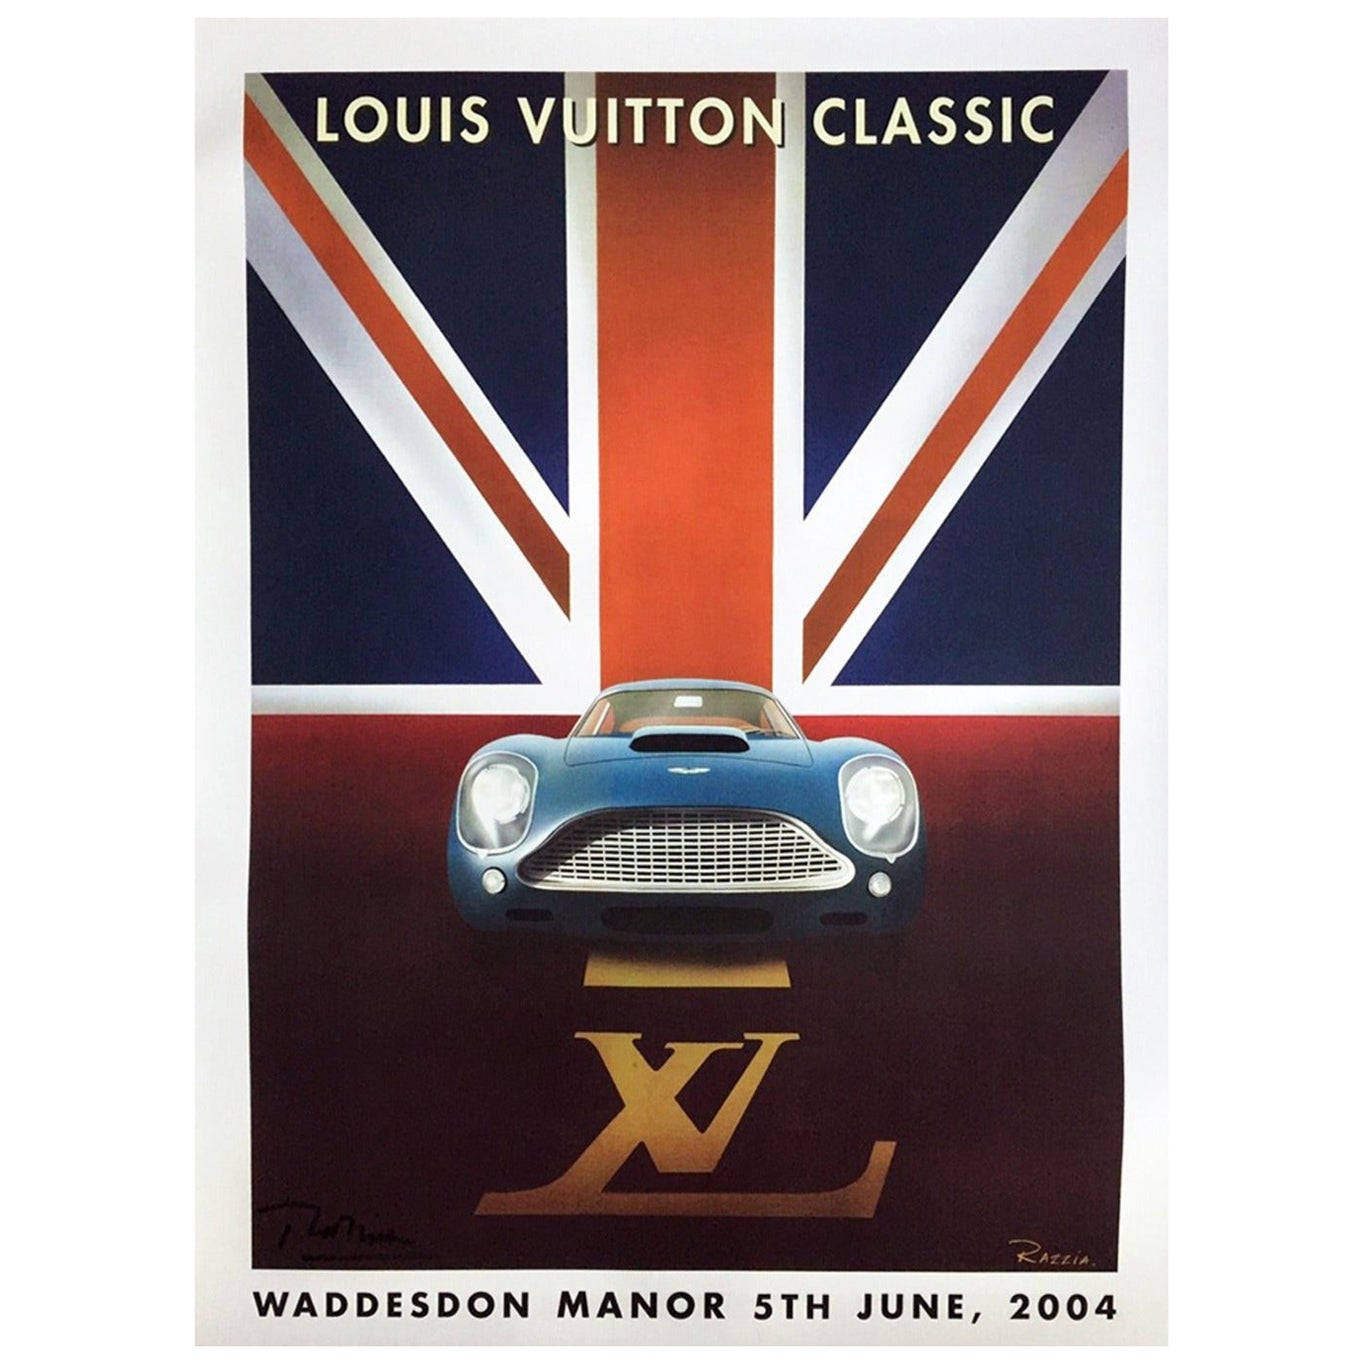 Vintage poster – Louis Vuitton Cup, Auckland, New Zealand